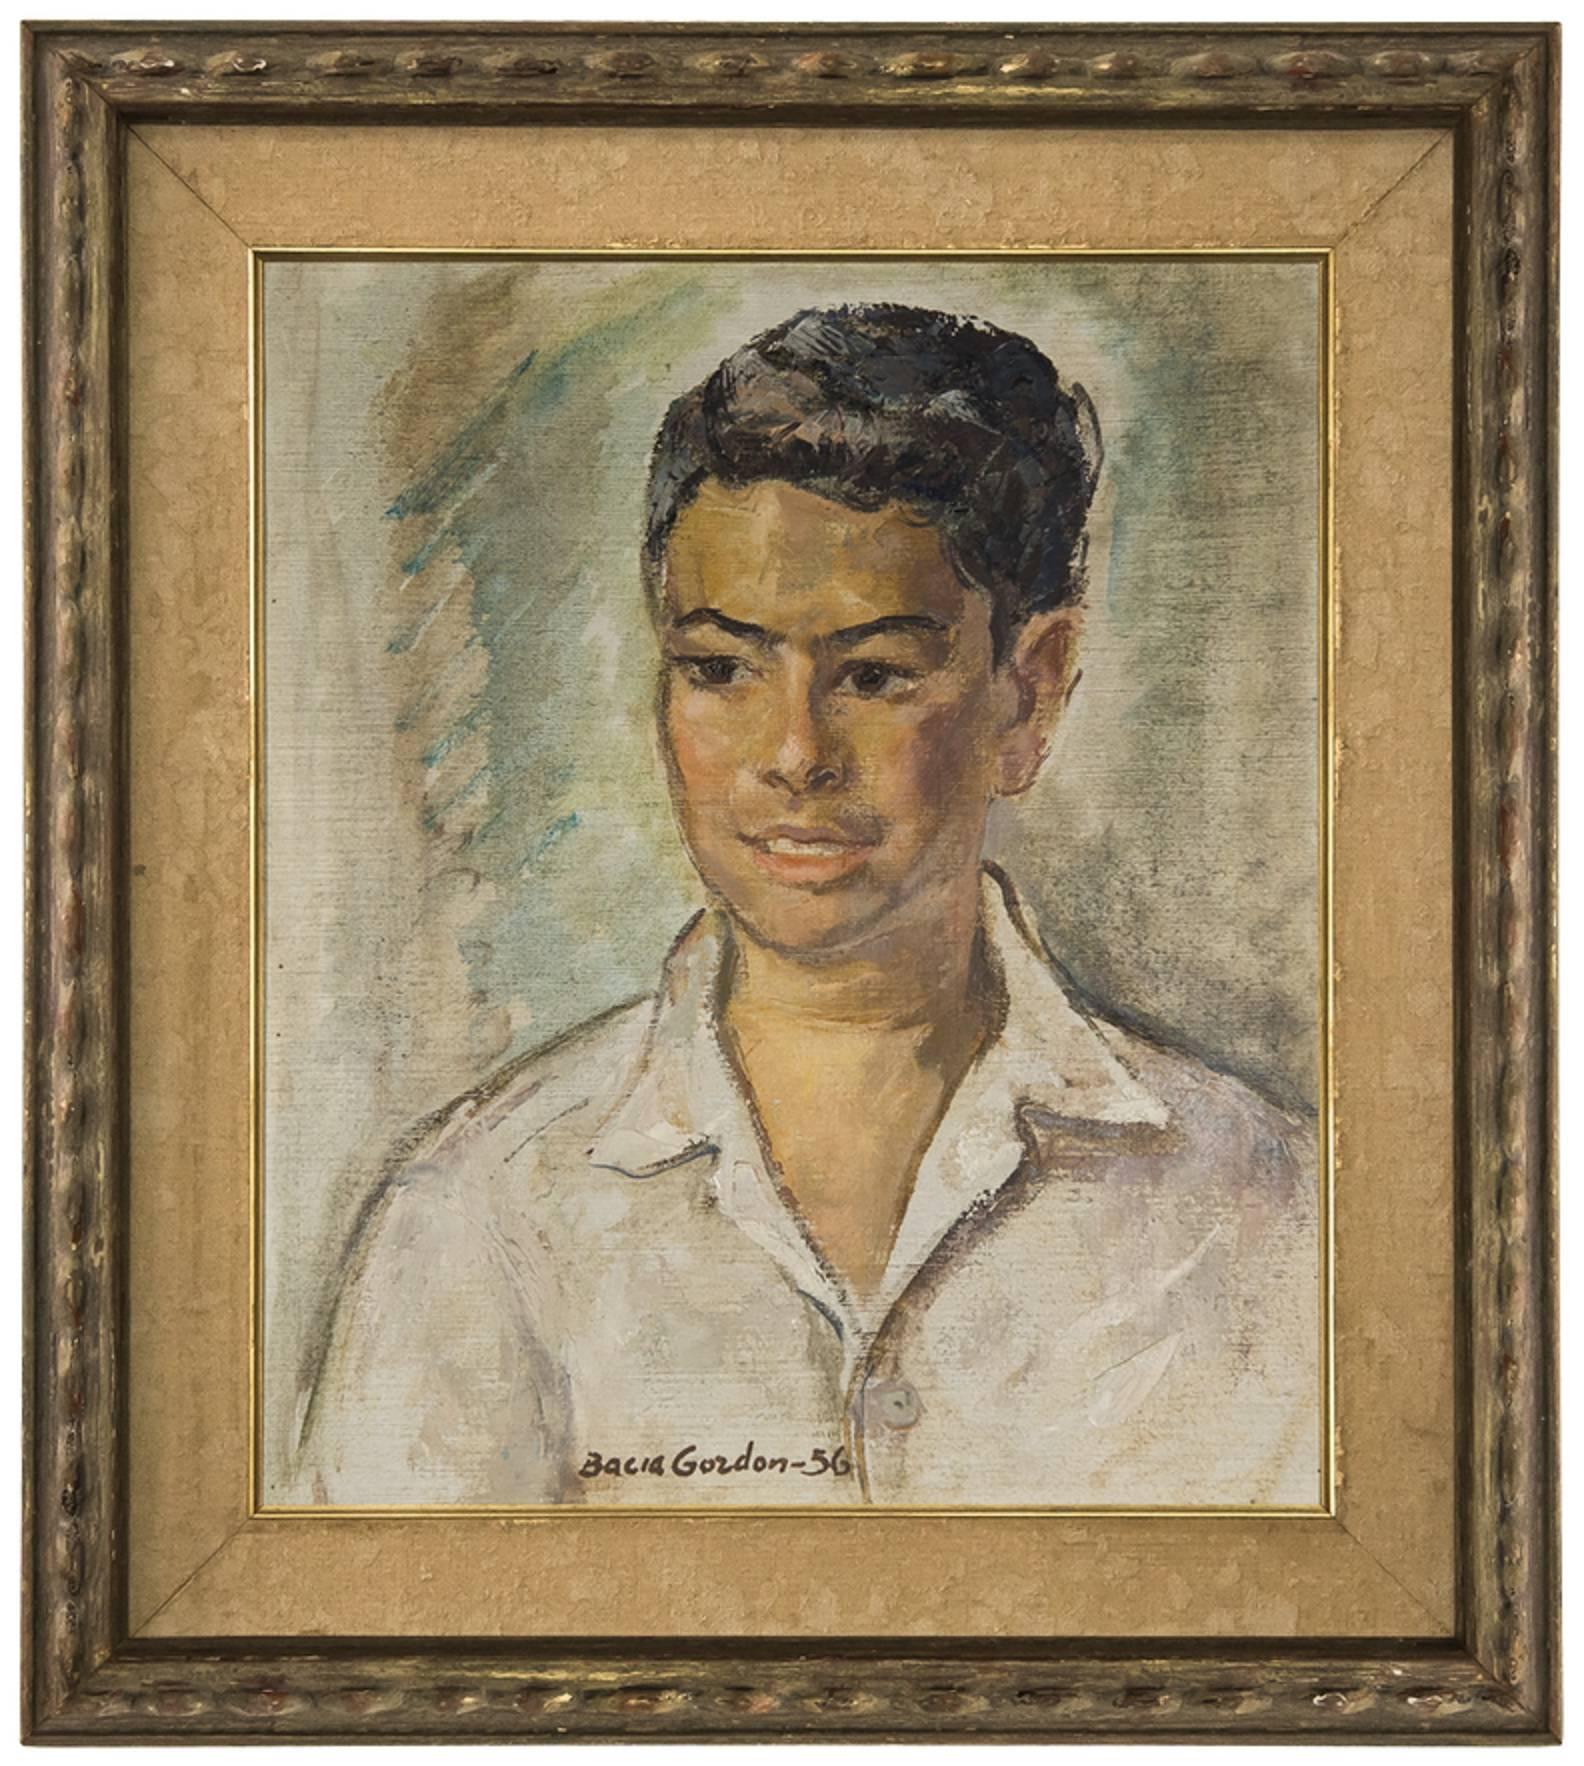 Bacia Gordon Figurative Painting - Portrait of an Israeli Boy